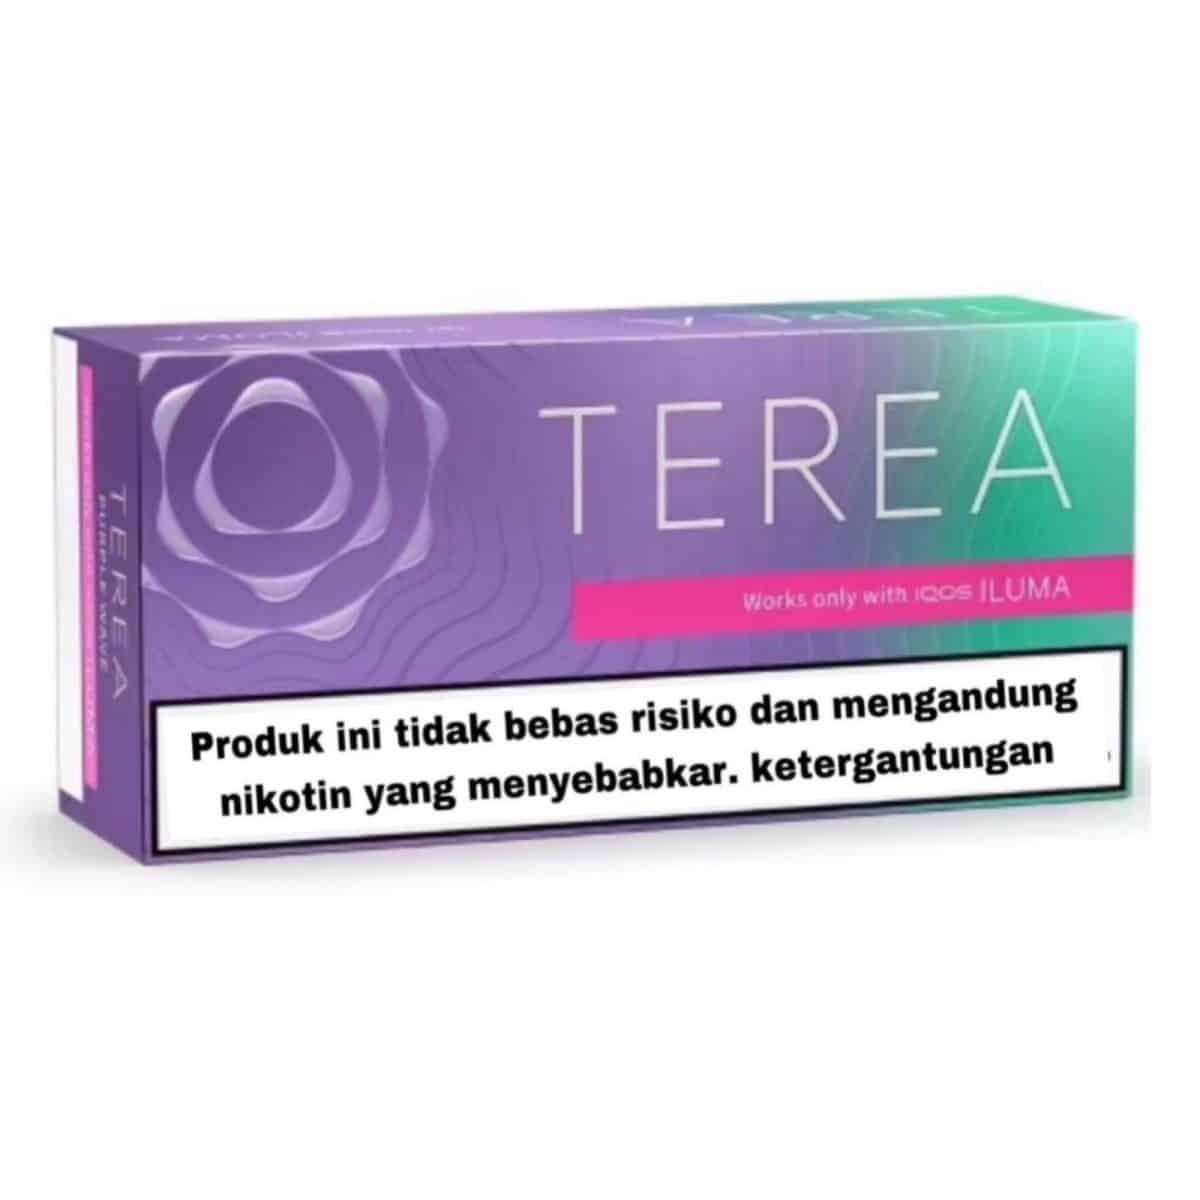 Terea Purple for IQOS ILUMA